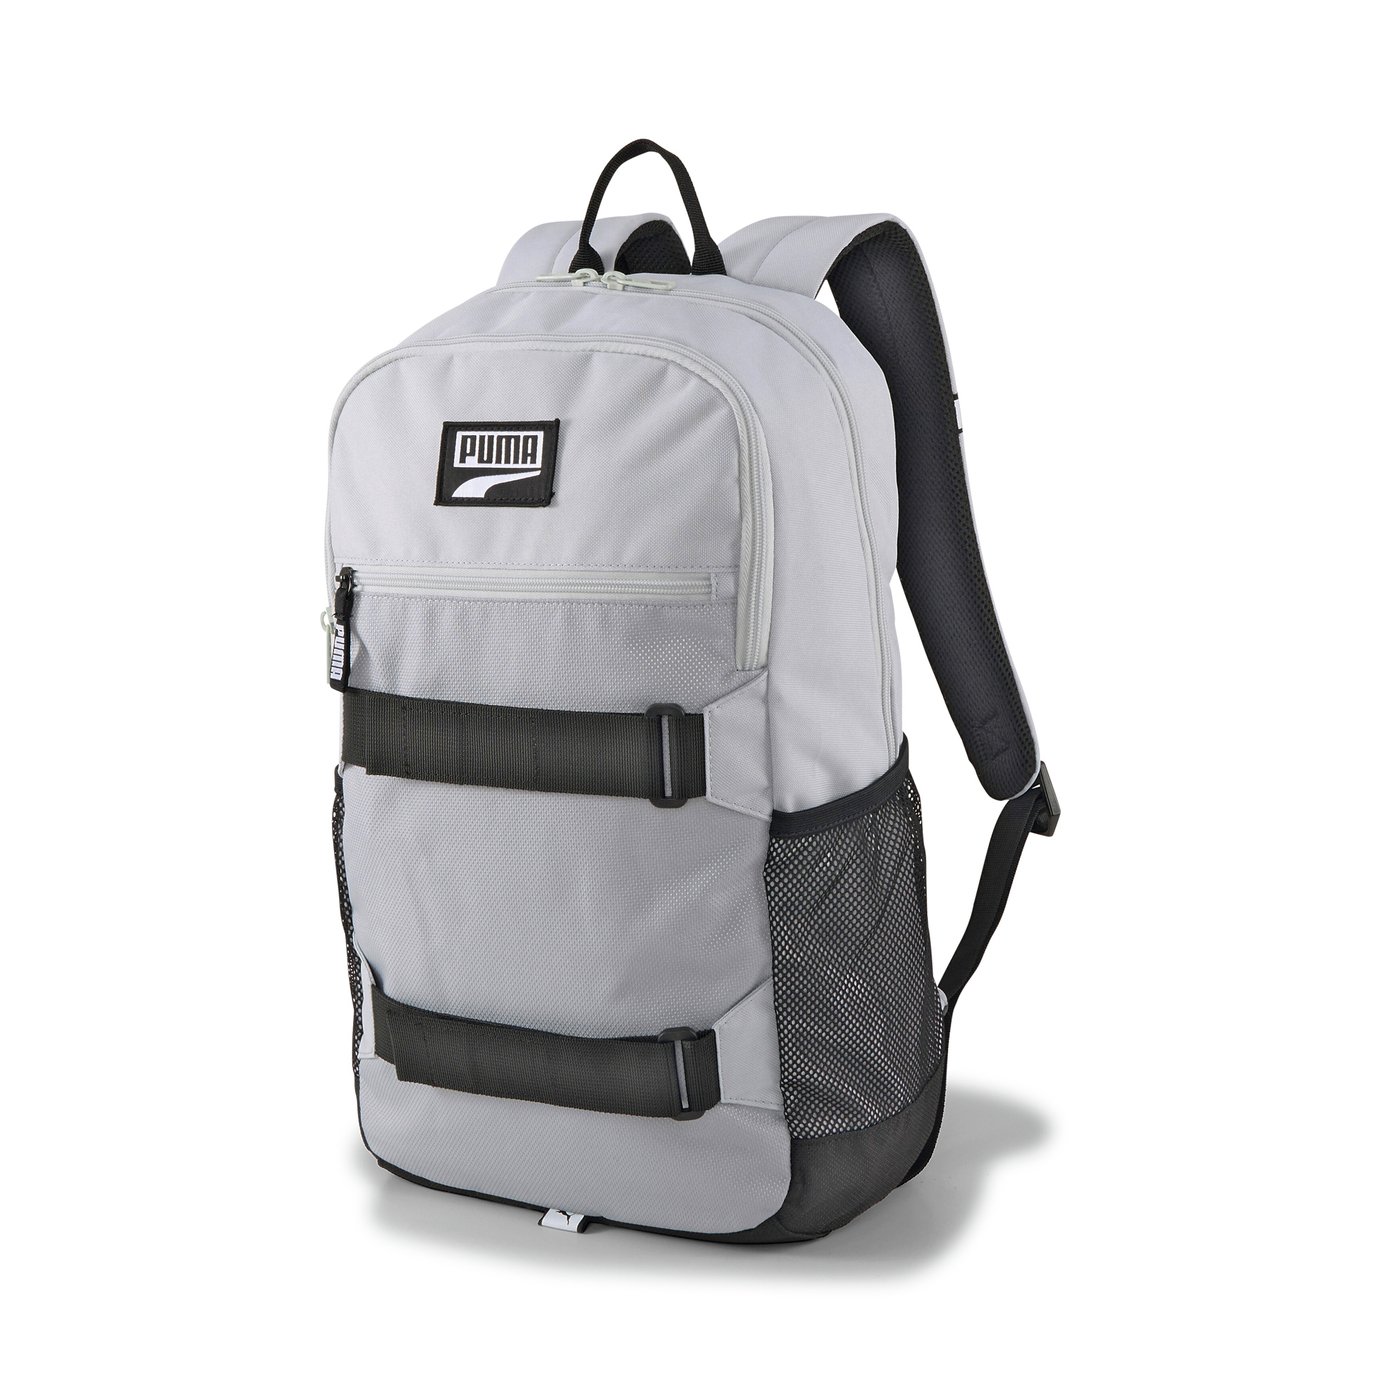 Puma Deck 14L Backpack Review